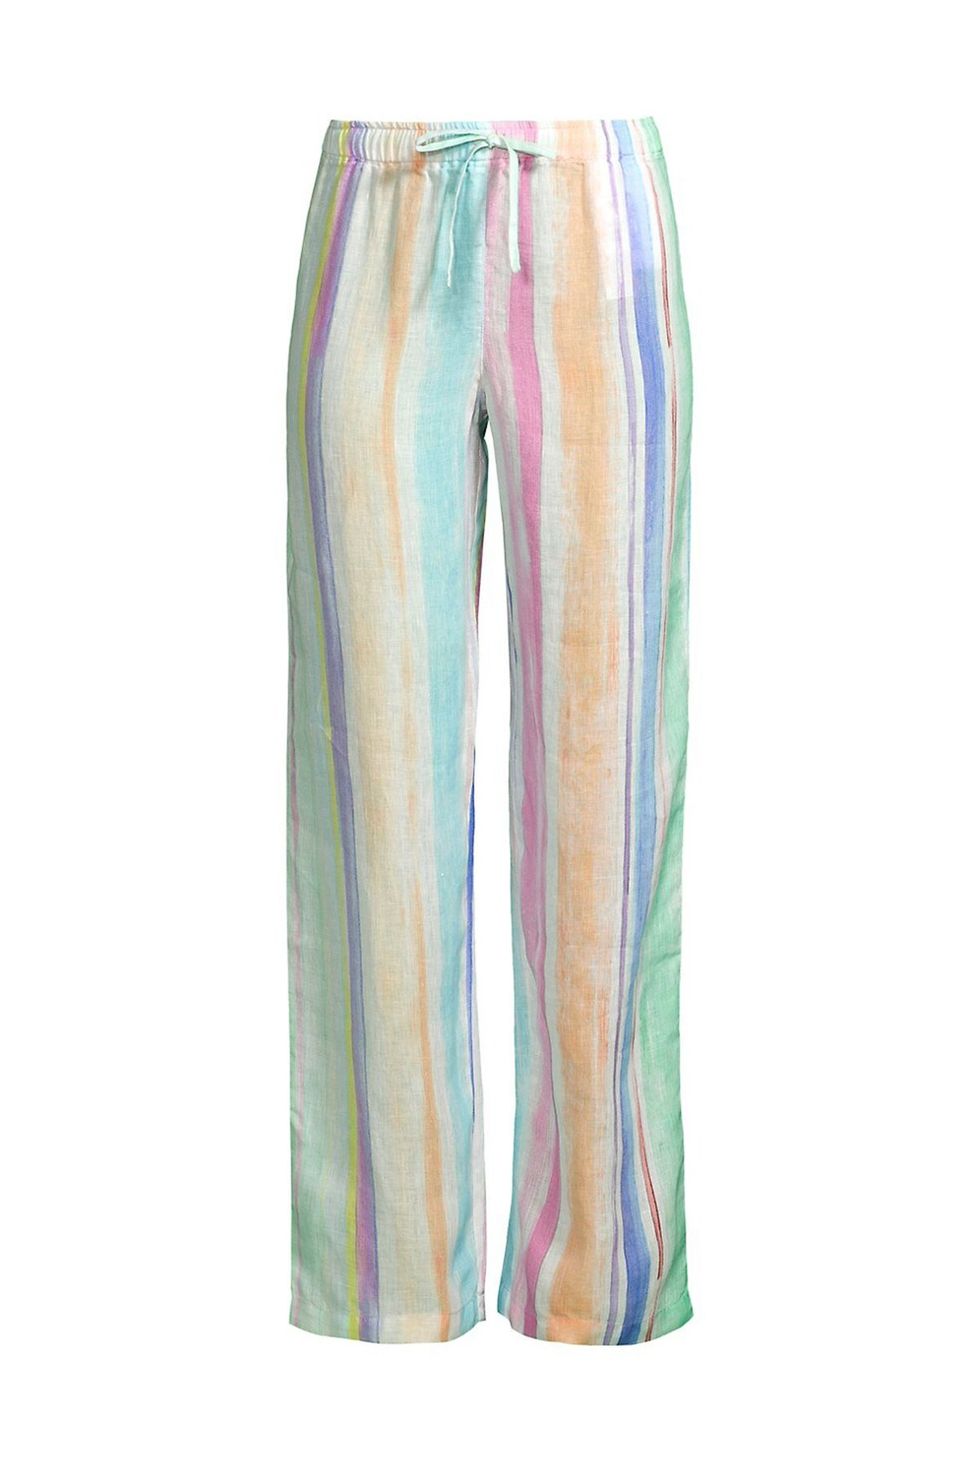 Watercolor Striped Linen Pants